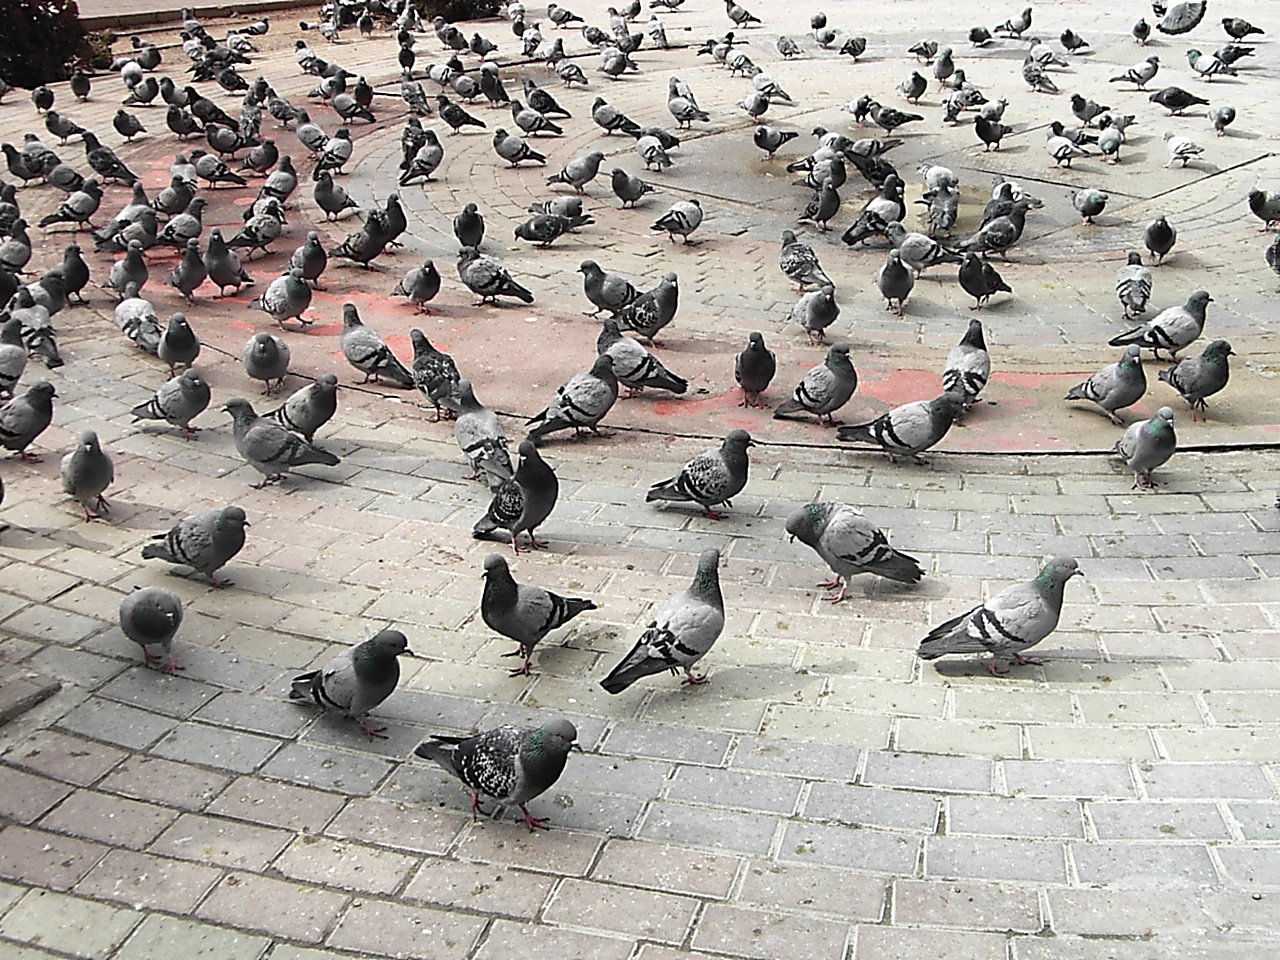 a flock of pigeons walking across a brick ground